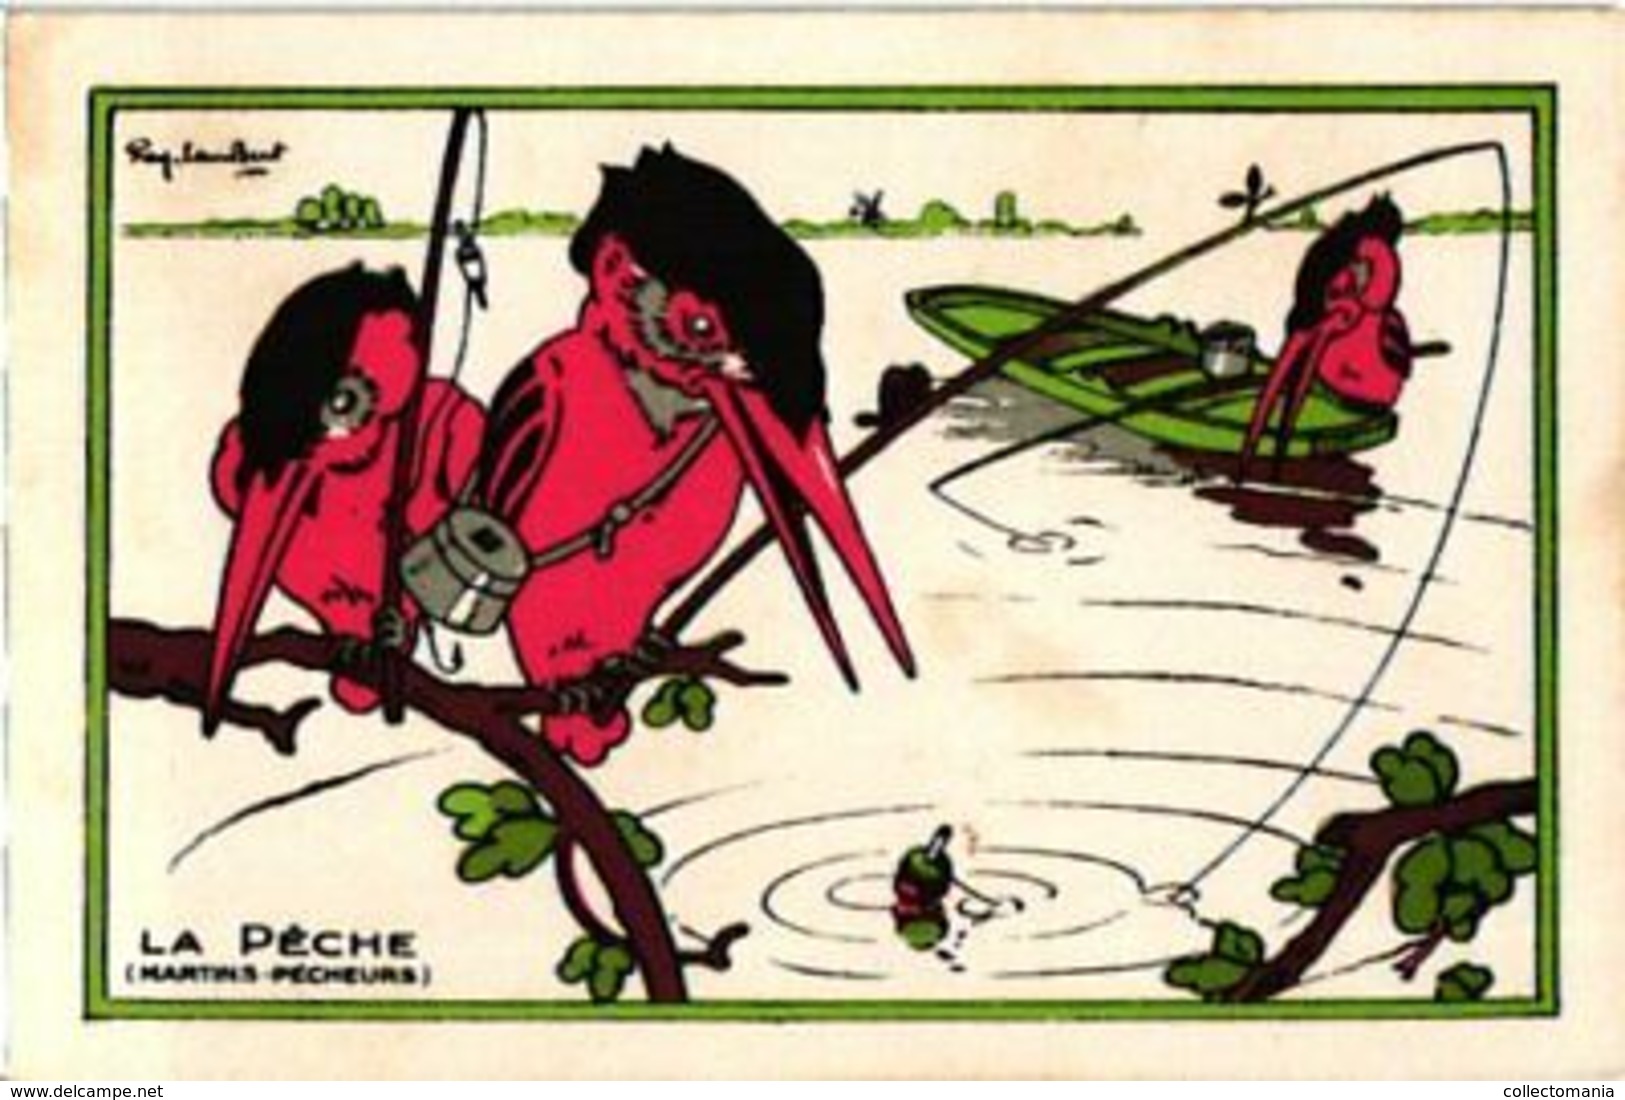 12 Trade Cards Dressed like people Animals Anthropomorphic c1910 illustrustrator Ray Caubert Litho music birds bathing